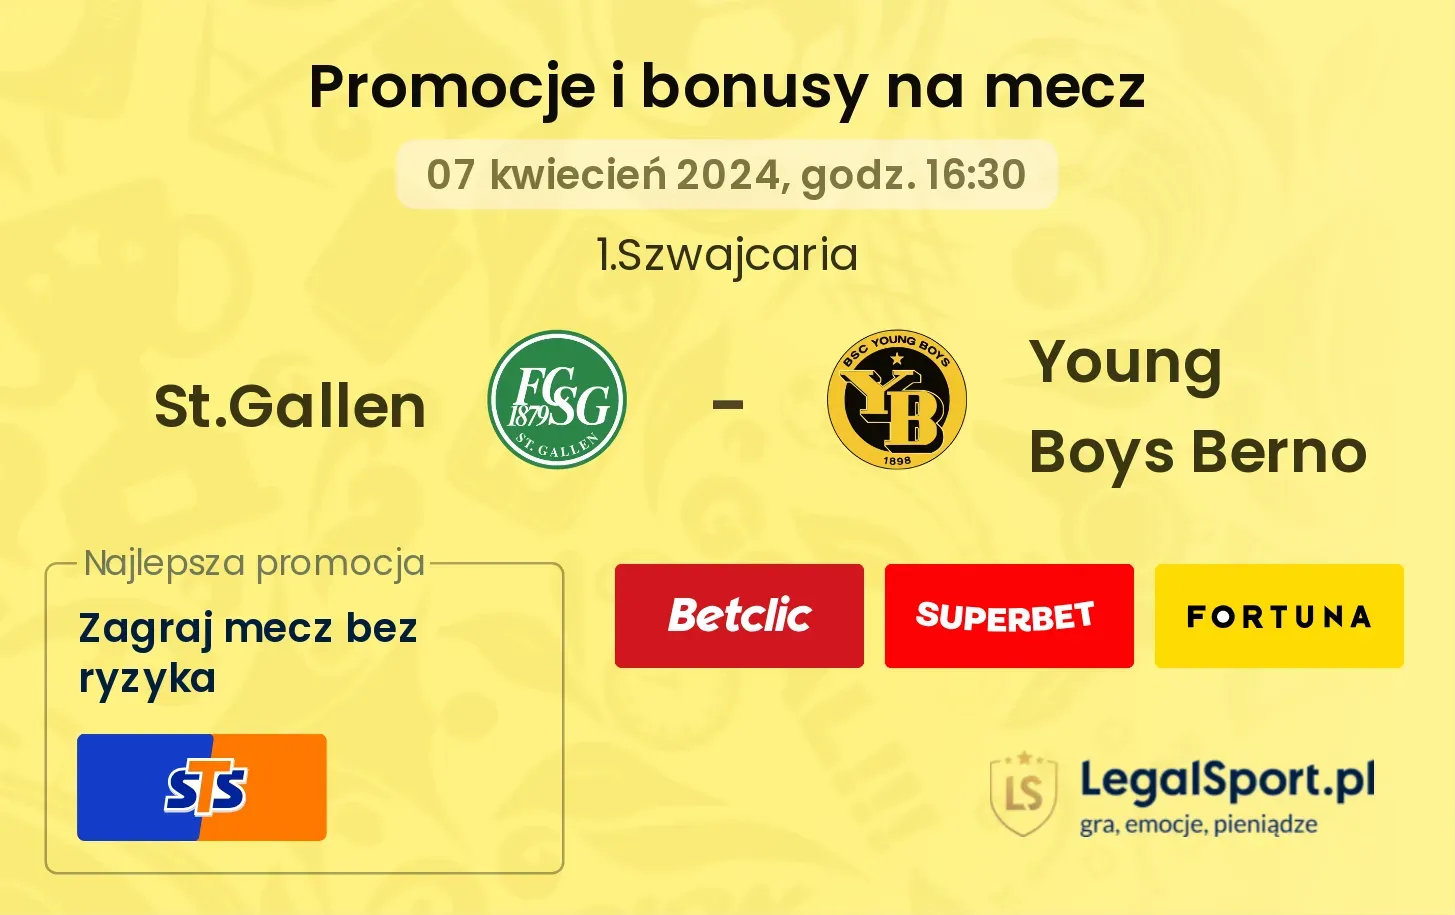 St.Gallen - Young Boys Berno promocje bonusy na mecz